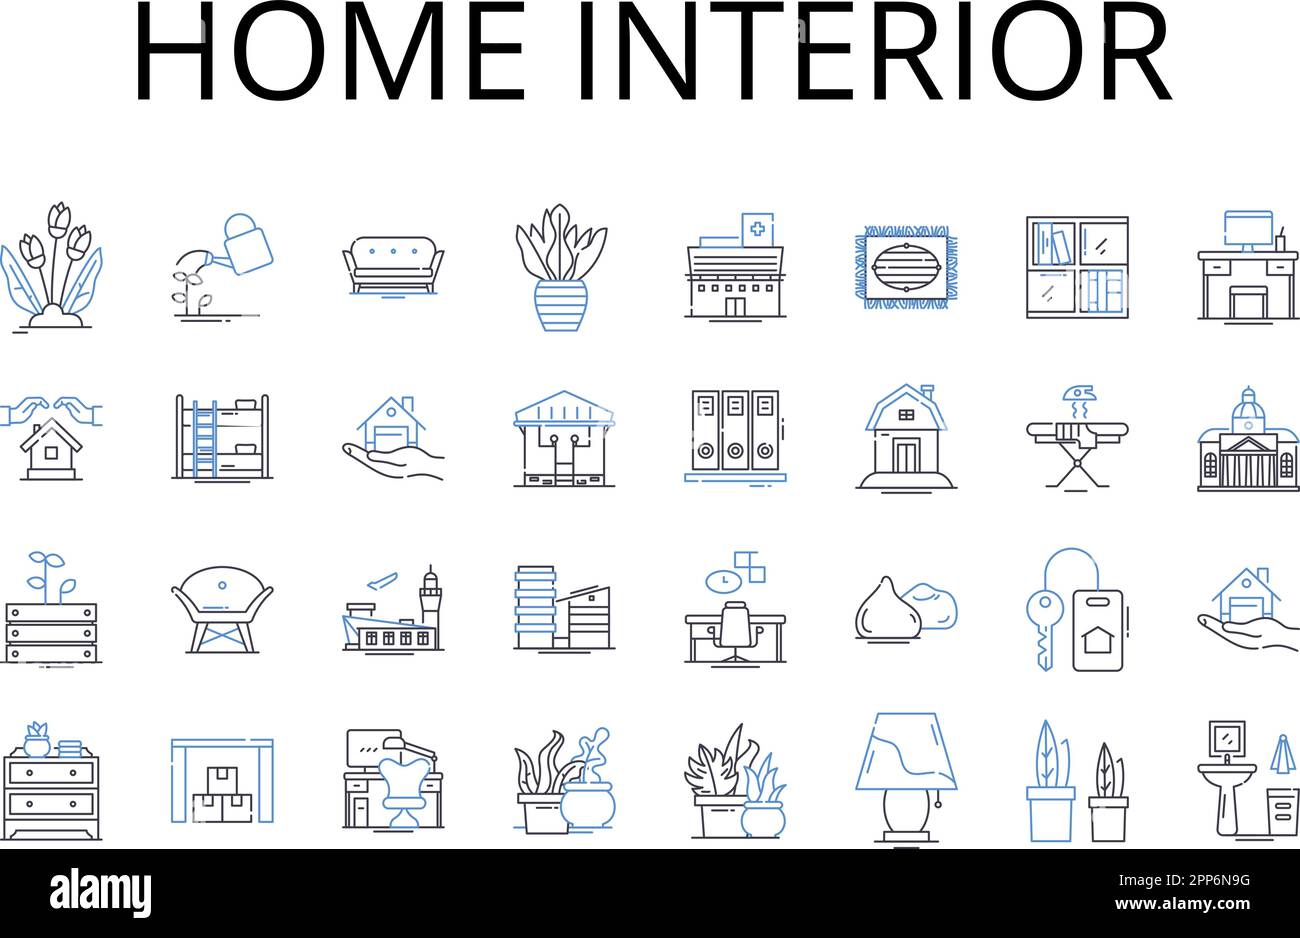 Home interior line icons collection. Office space, Kitchen design, Living room, Bedroom decor, Exterior design, Bathroom remodel, Garden design vector Stock Vector